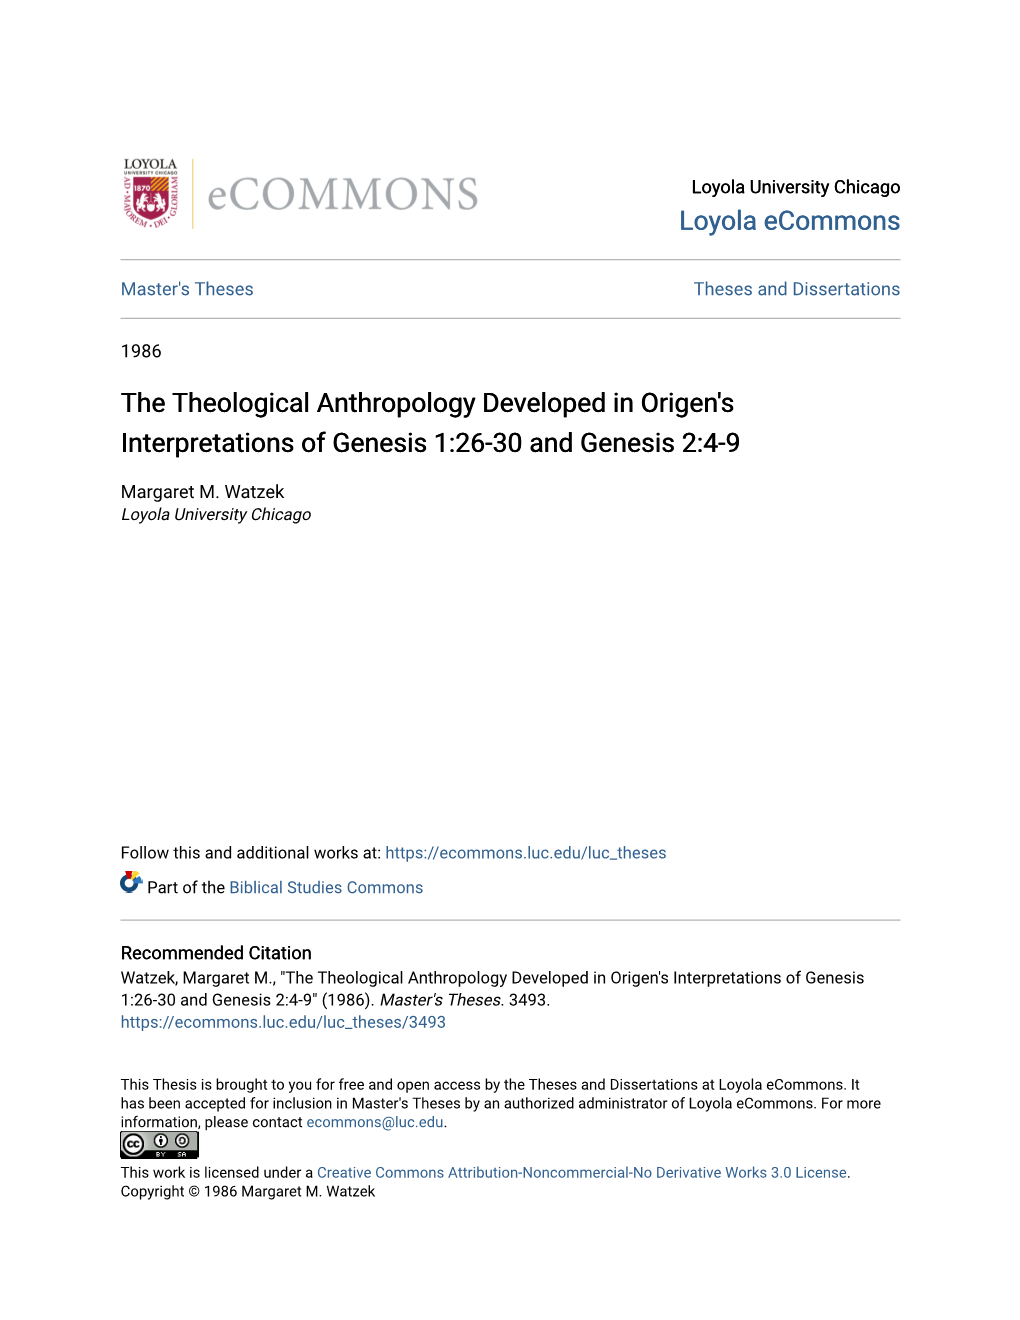 The Theological Anthropology Developed in Origen's Interpretations of Genesis 1:26-30 and Genesis 2:4-9